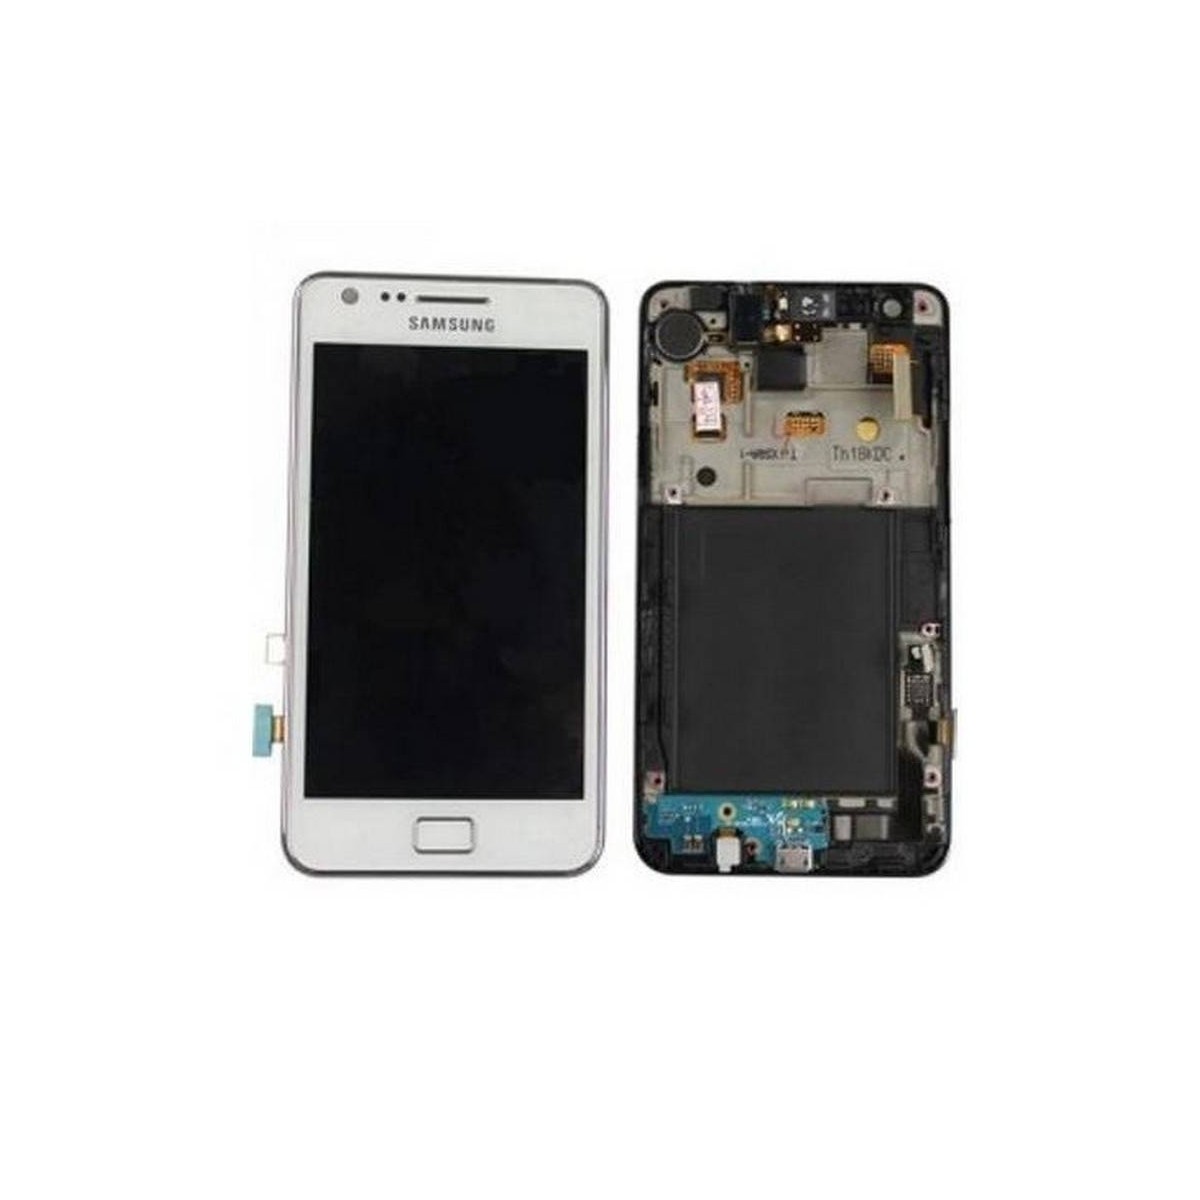 Pantalla (Display) y ventana táctil para Samsung i9100 Galaxy S2/II blanca 